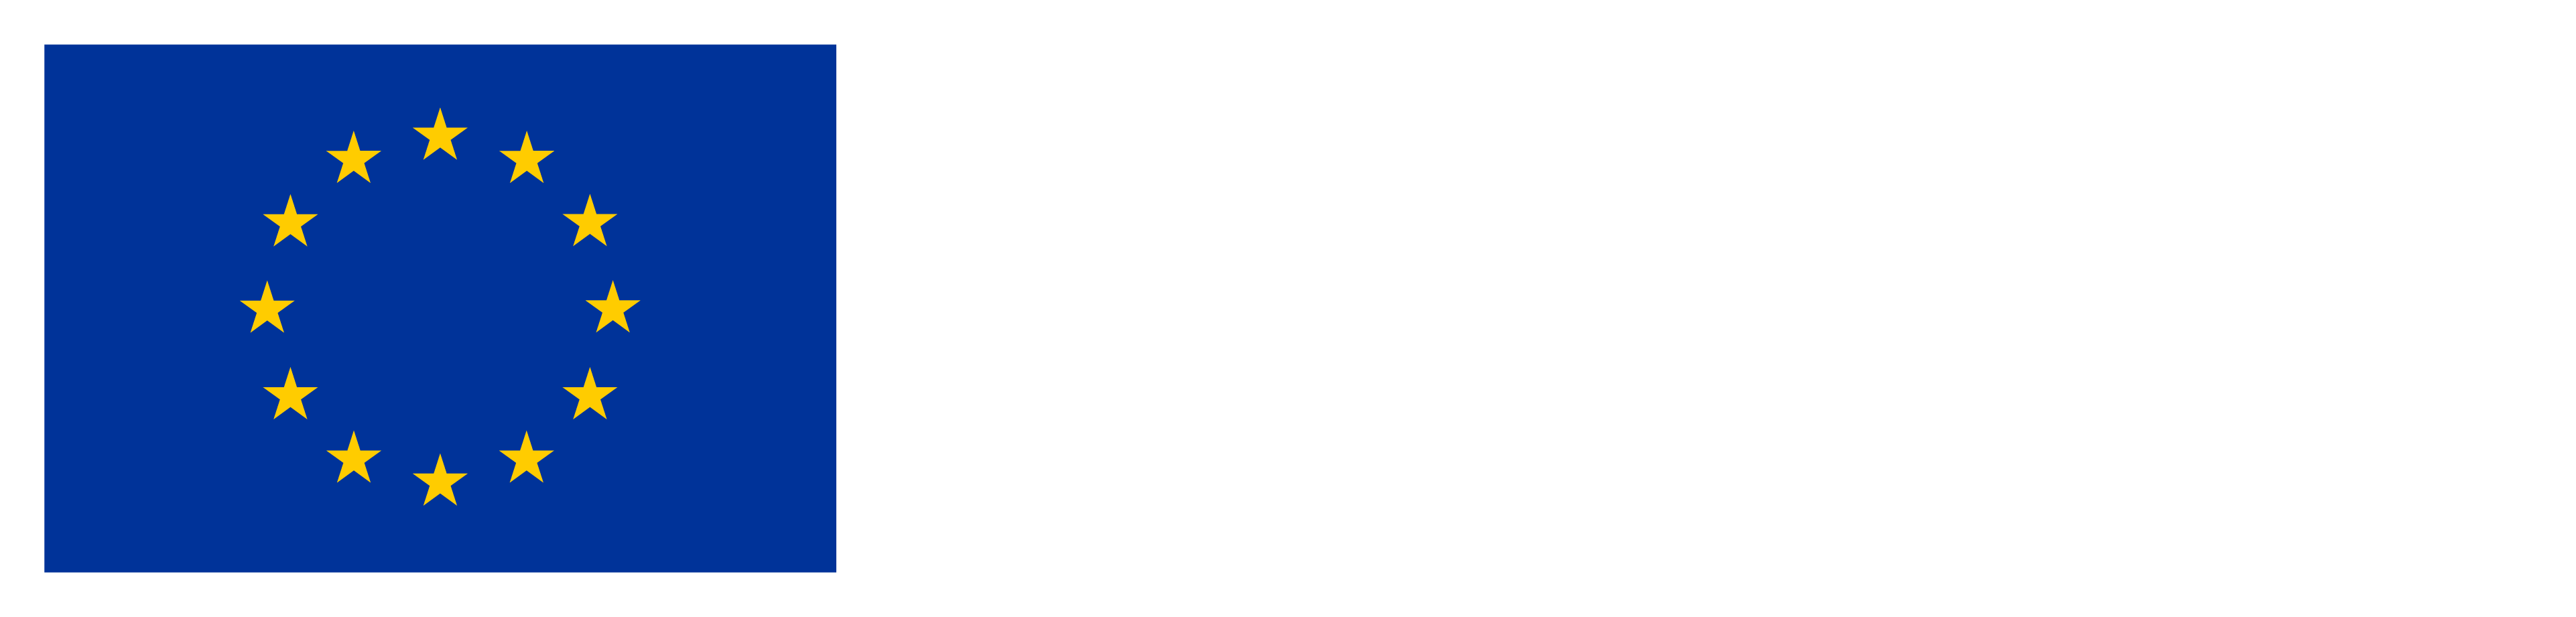 EU Next Gen logo